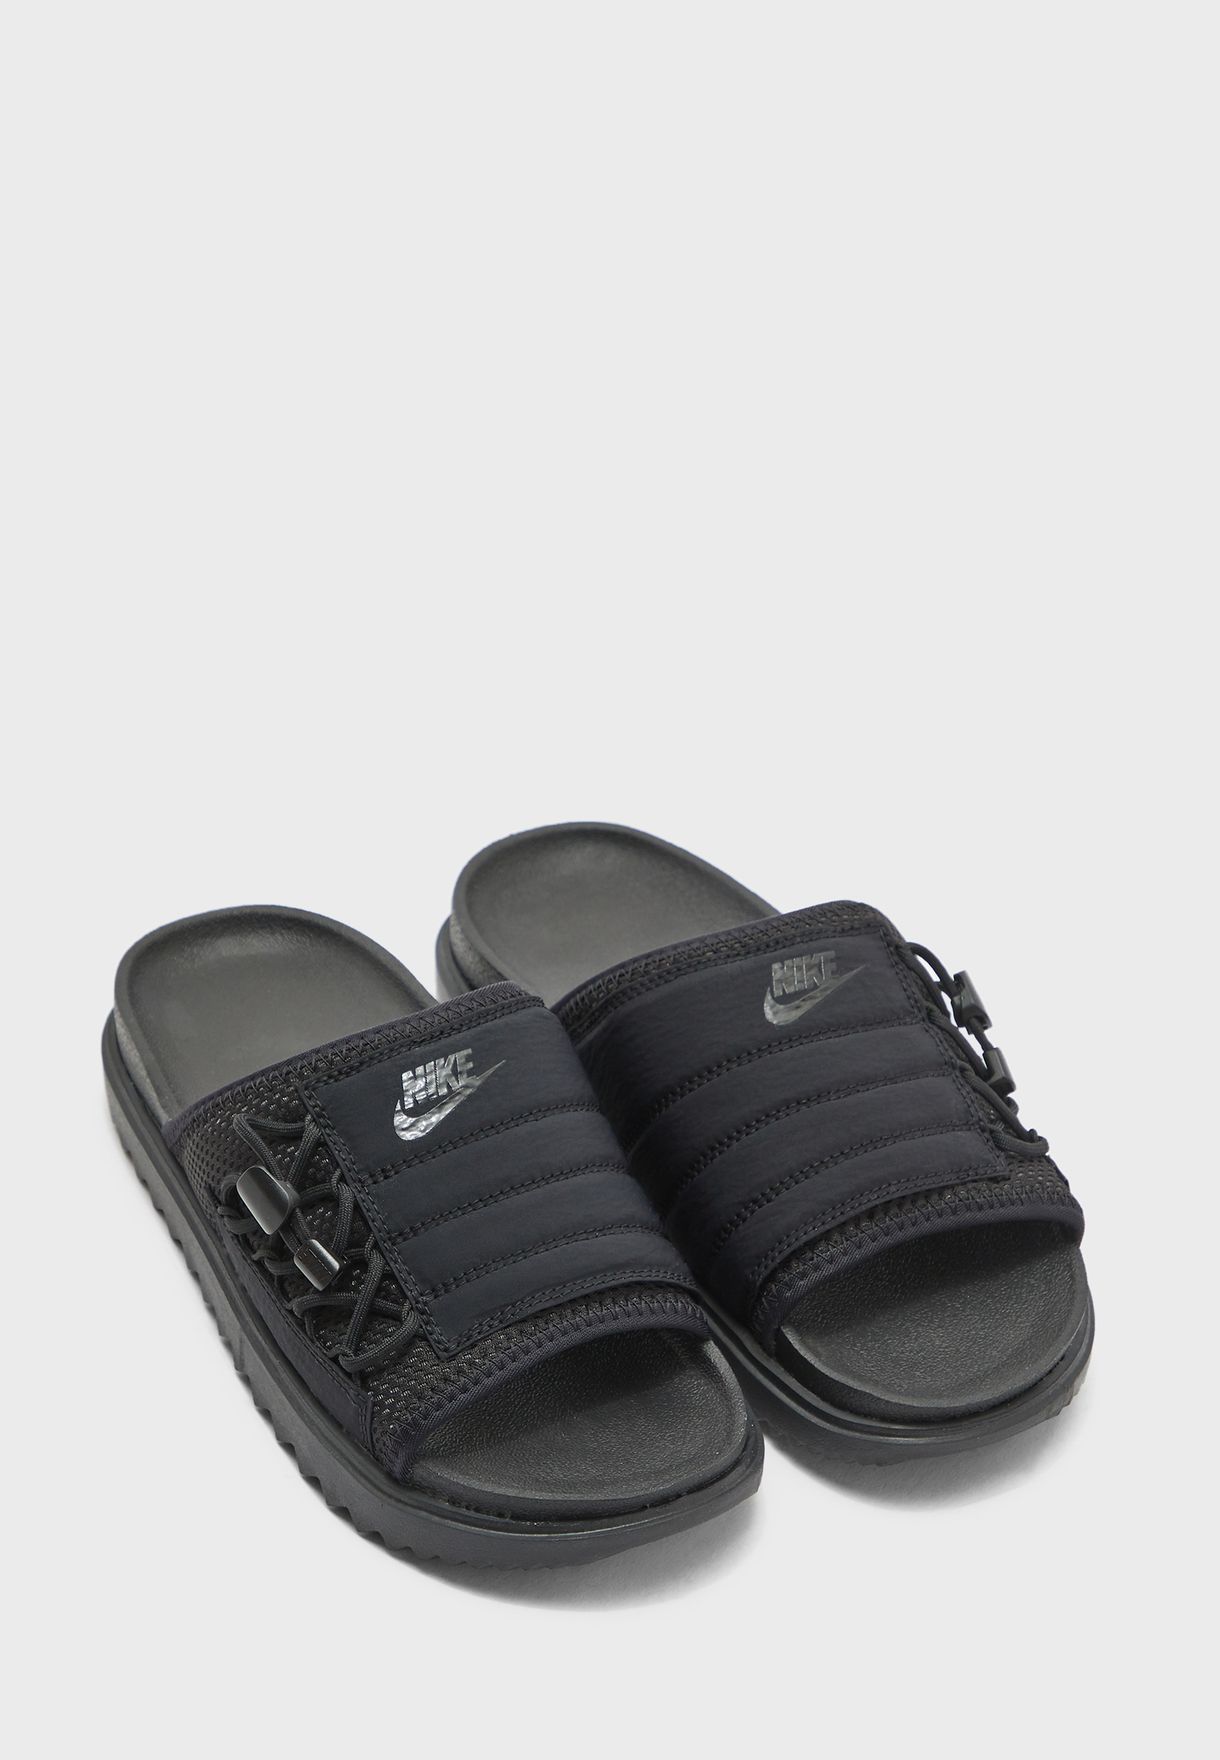 nike city sandals in black